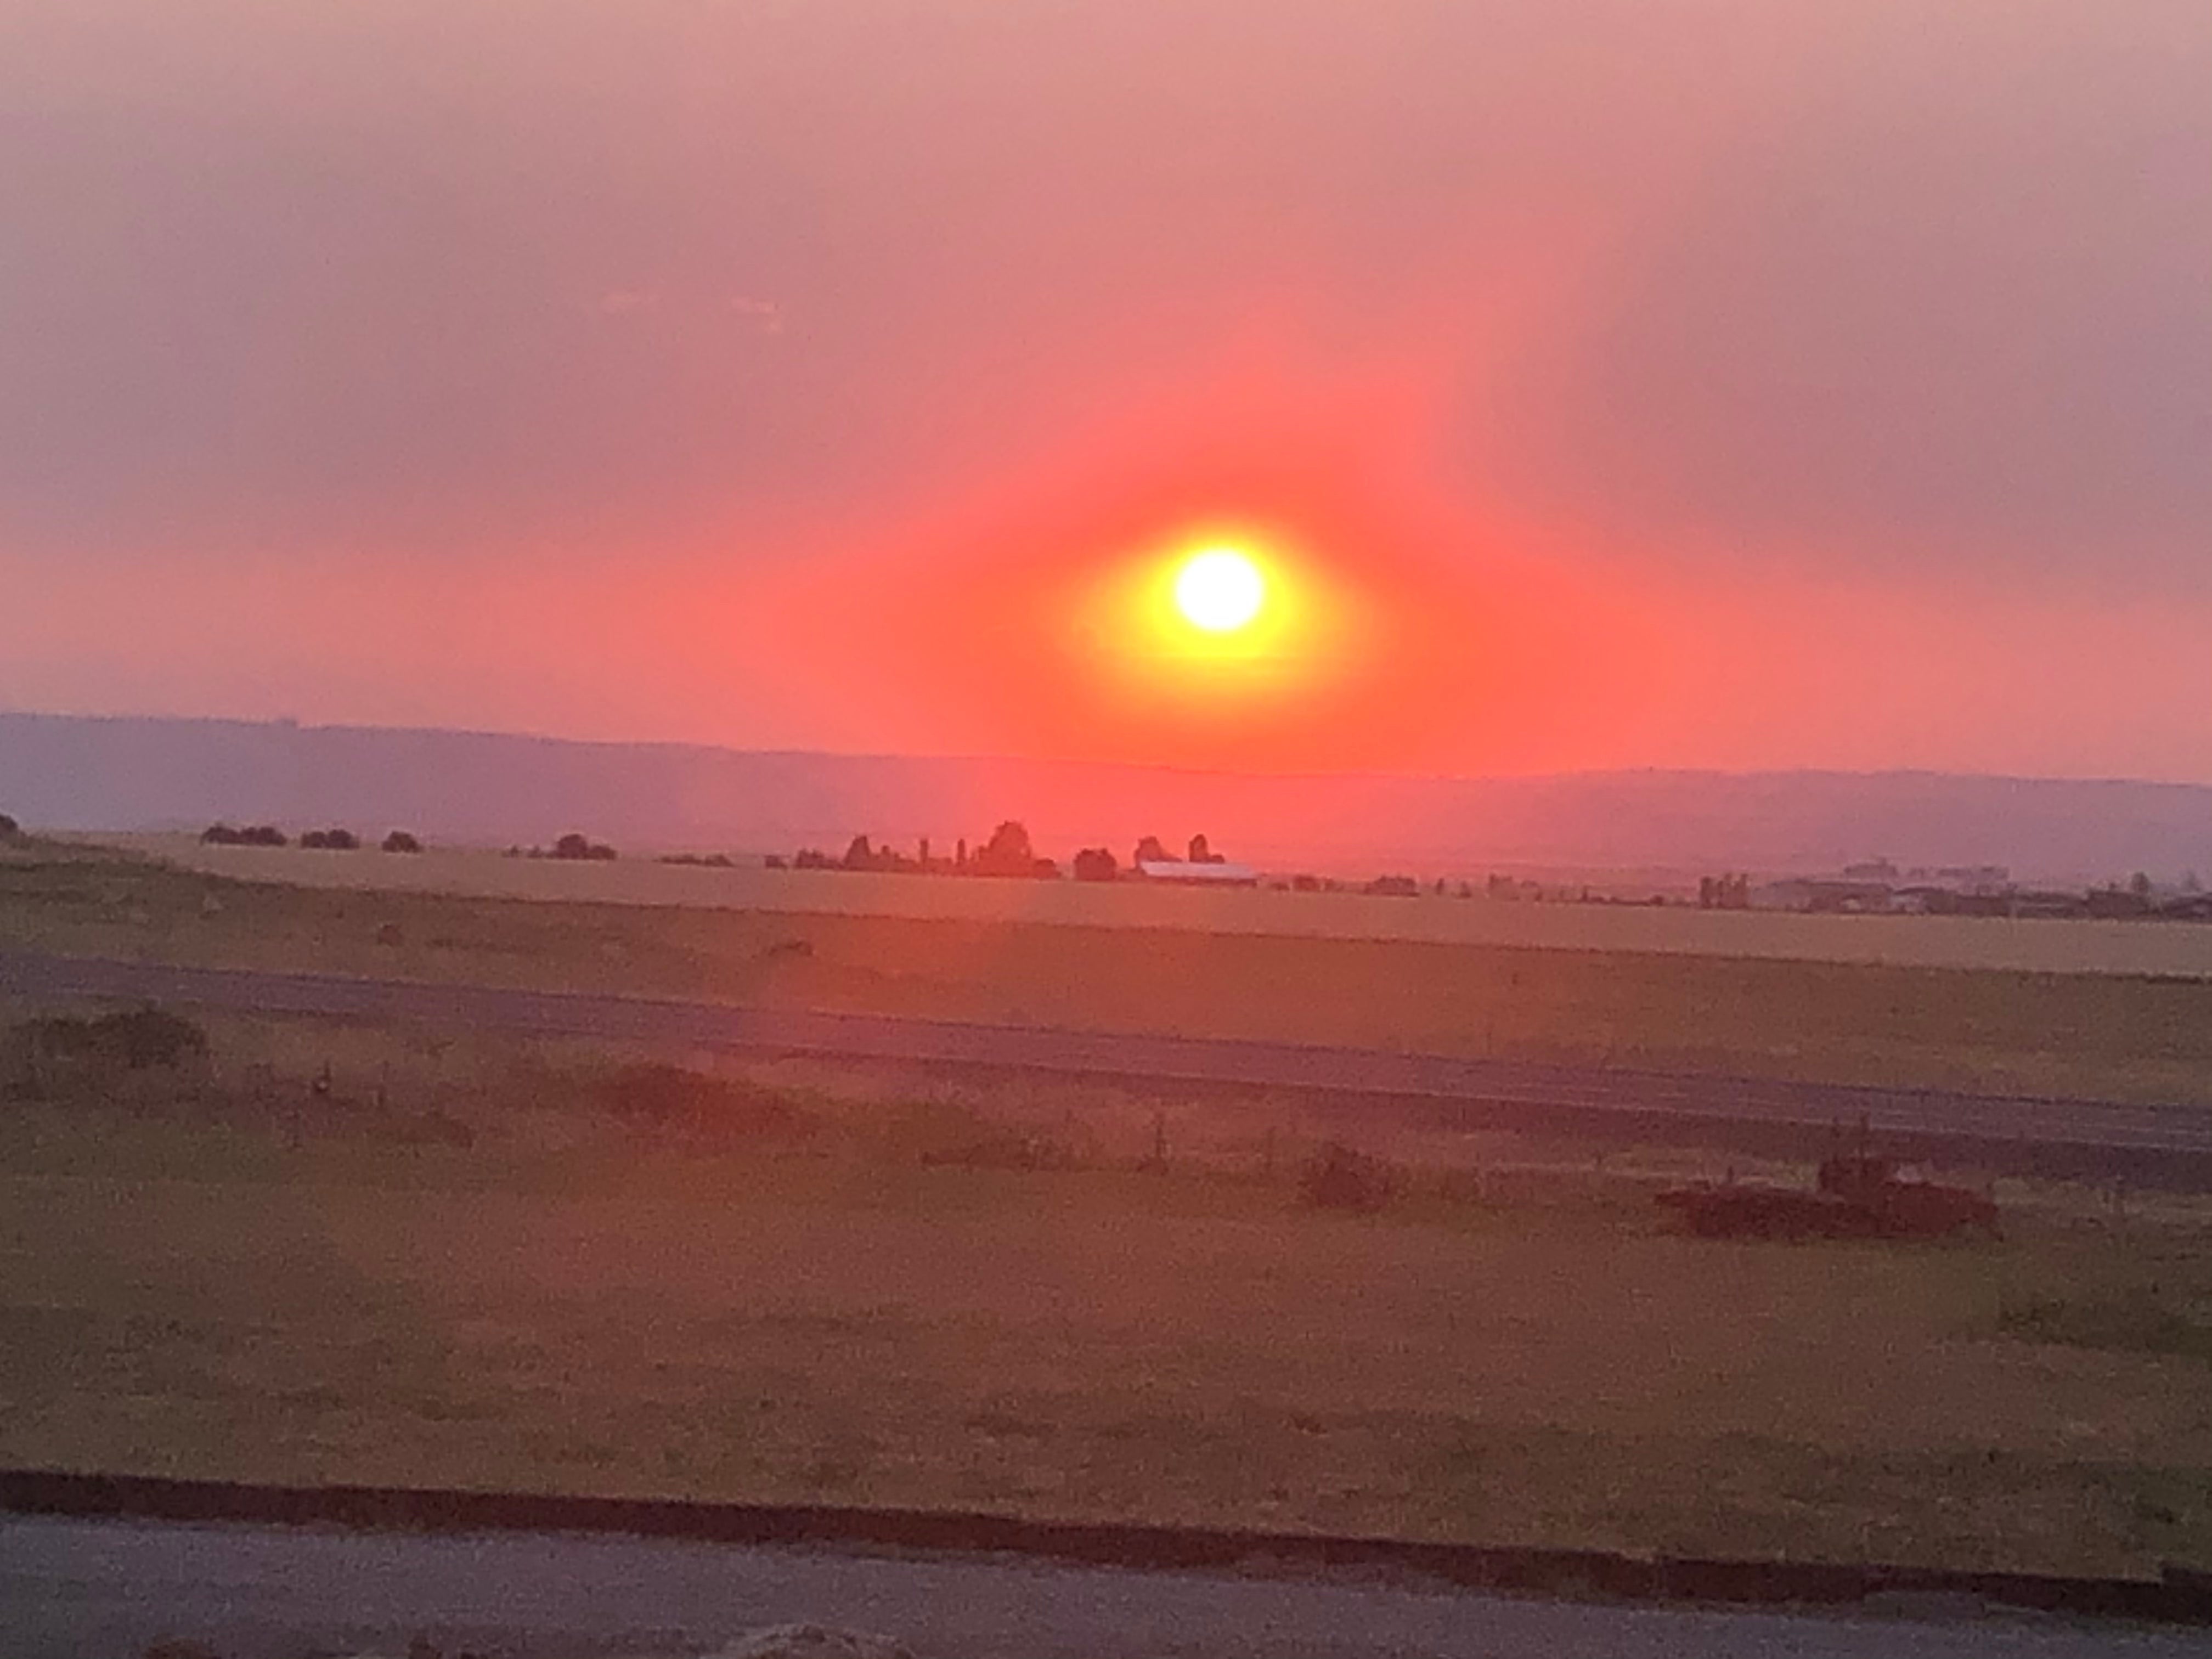 Amazing sunset over the Camas Prairie!